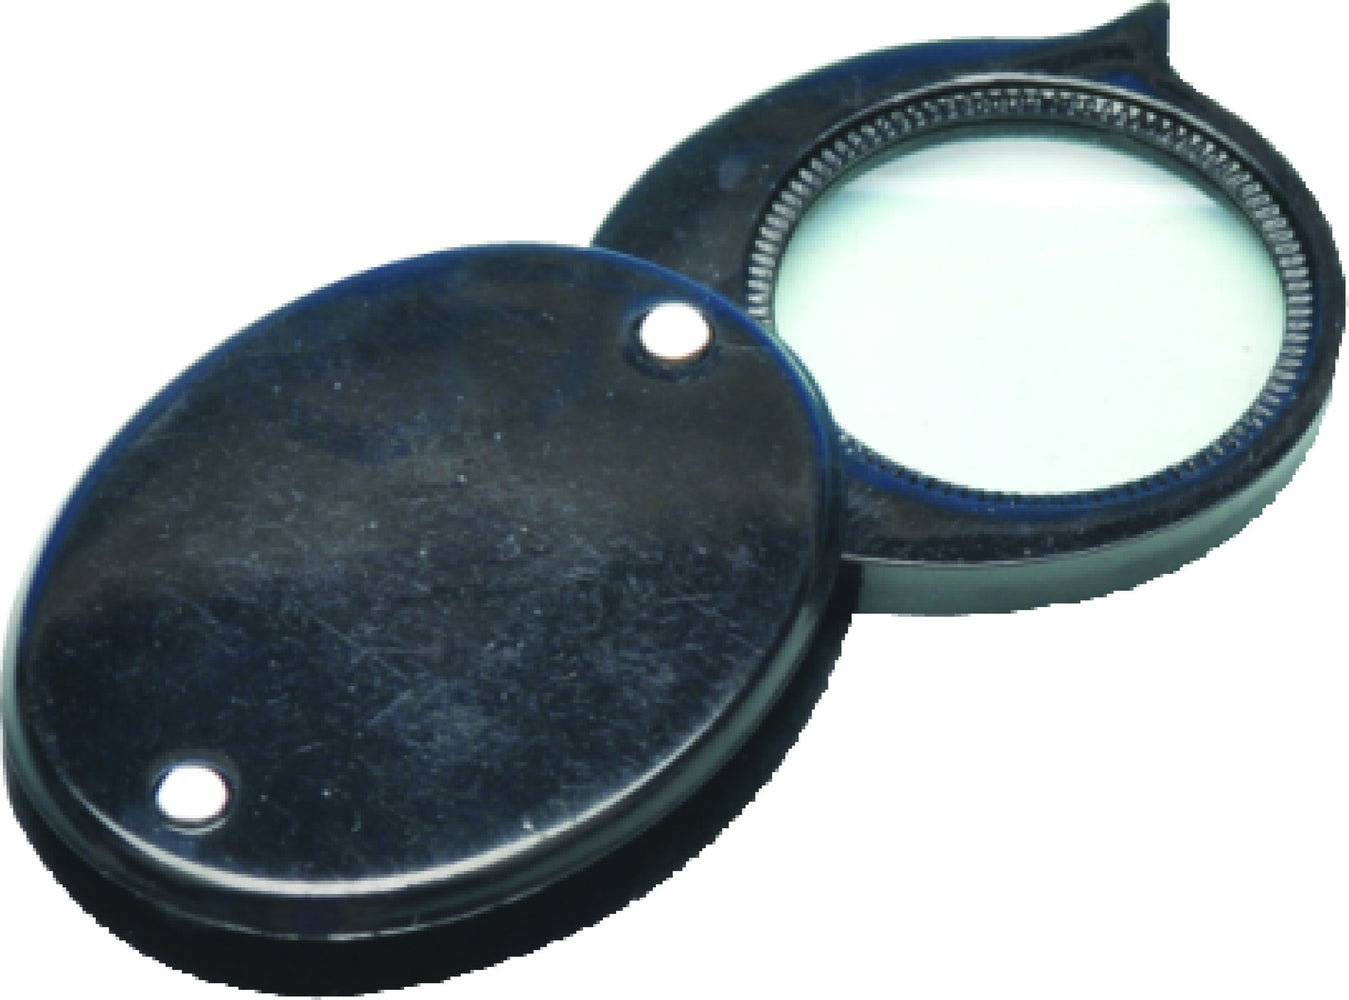 Magnifier - Folding, Single Folding Magnifier 4x Lens dia 38 mm